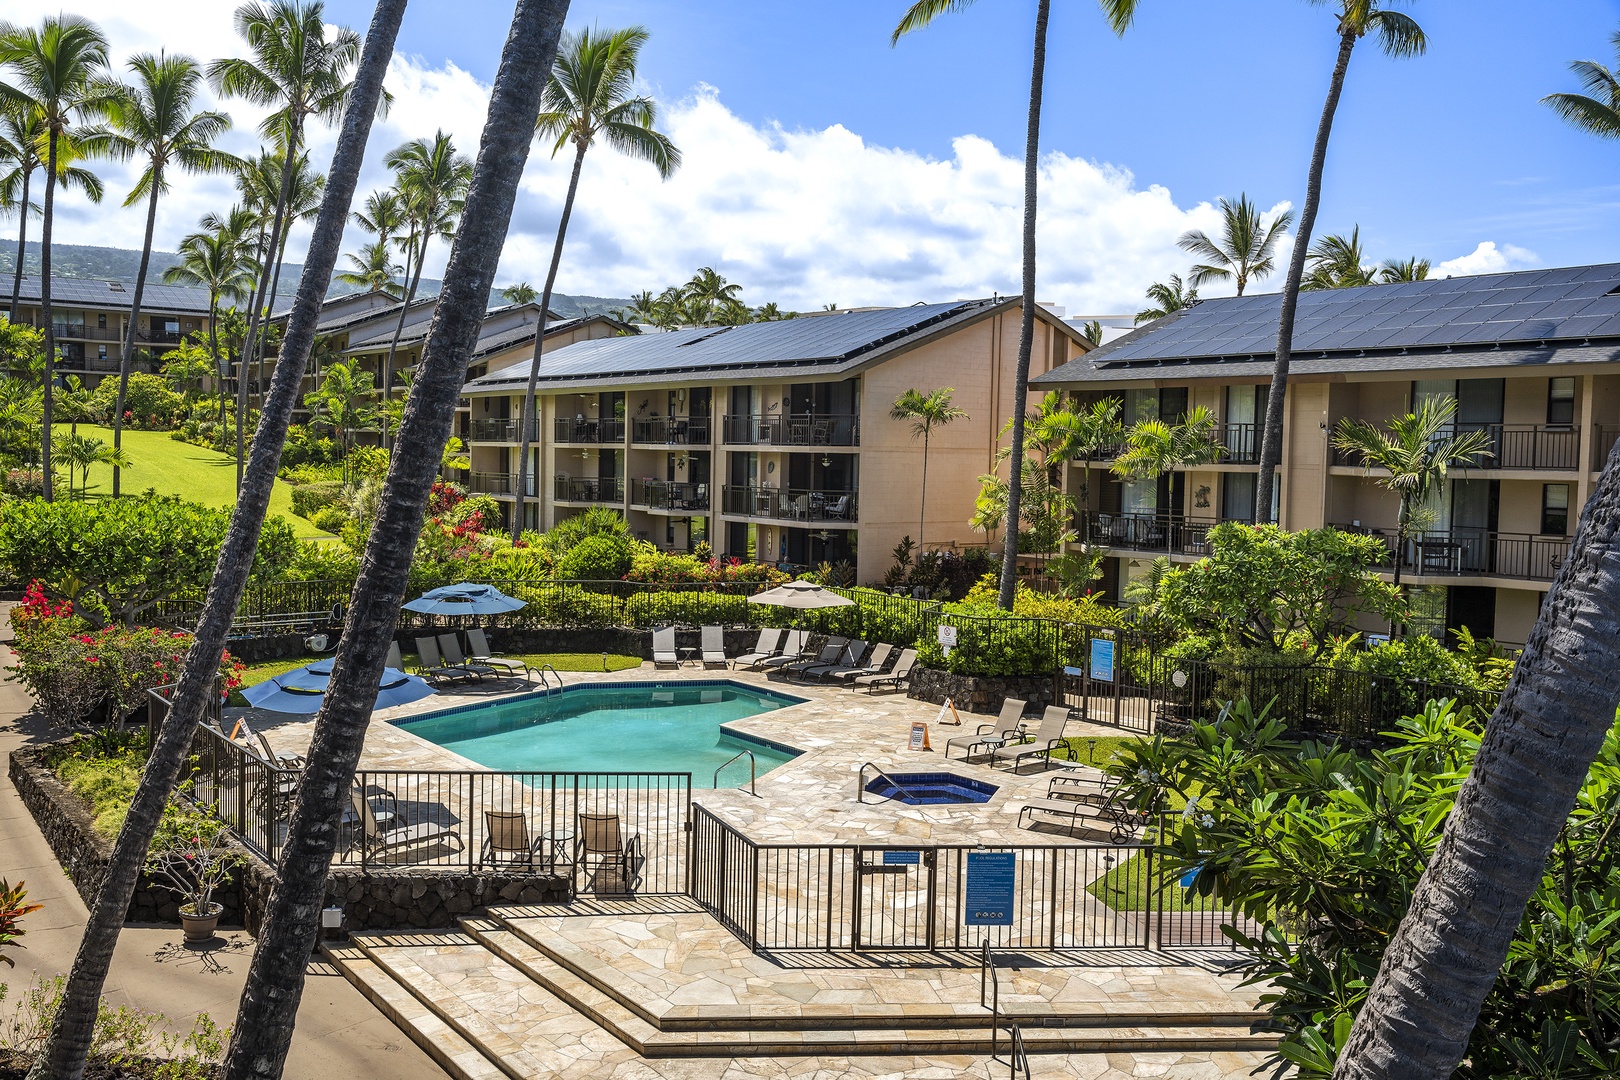 Kailua Kona Vacation Rentals, Kona Makai 6201 - Views of the complex pool from the Lanai